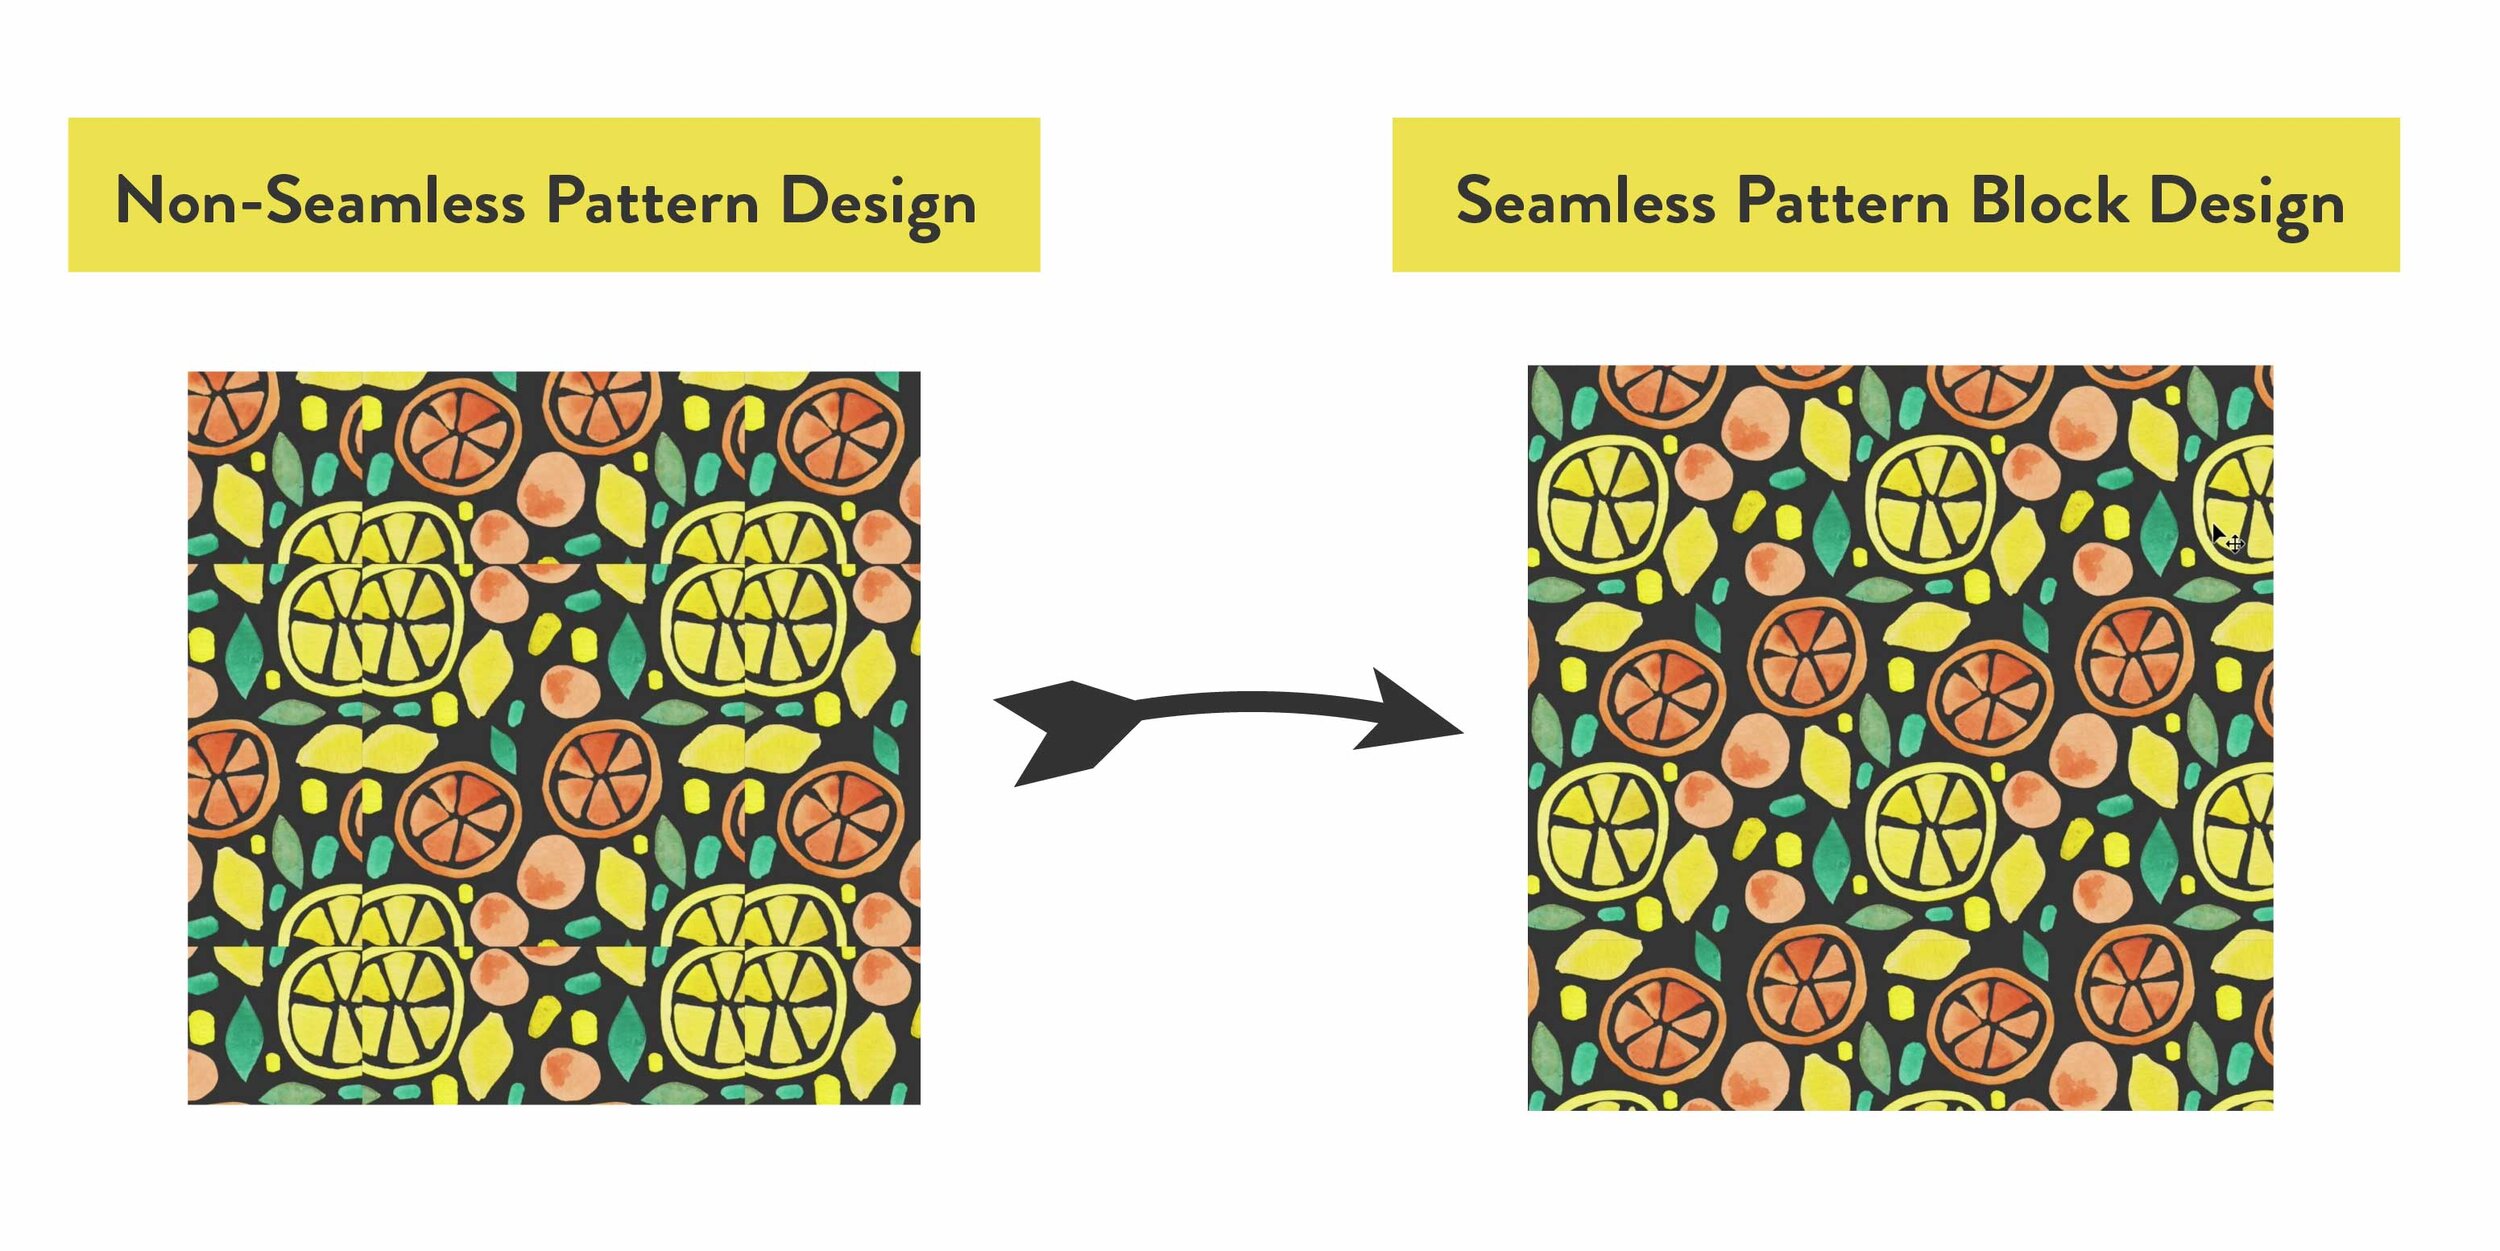 Seamless block print pattern in Photoshop 